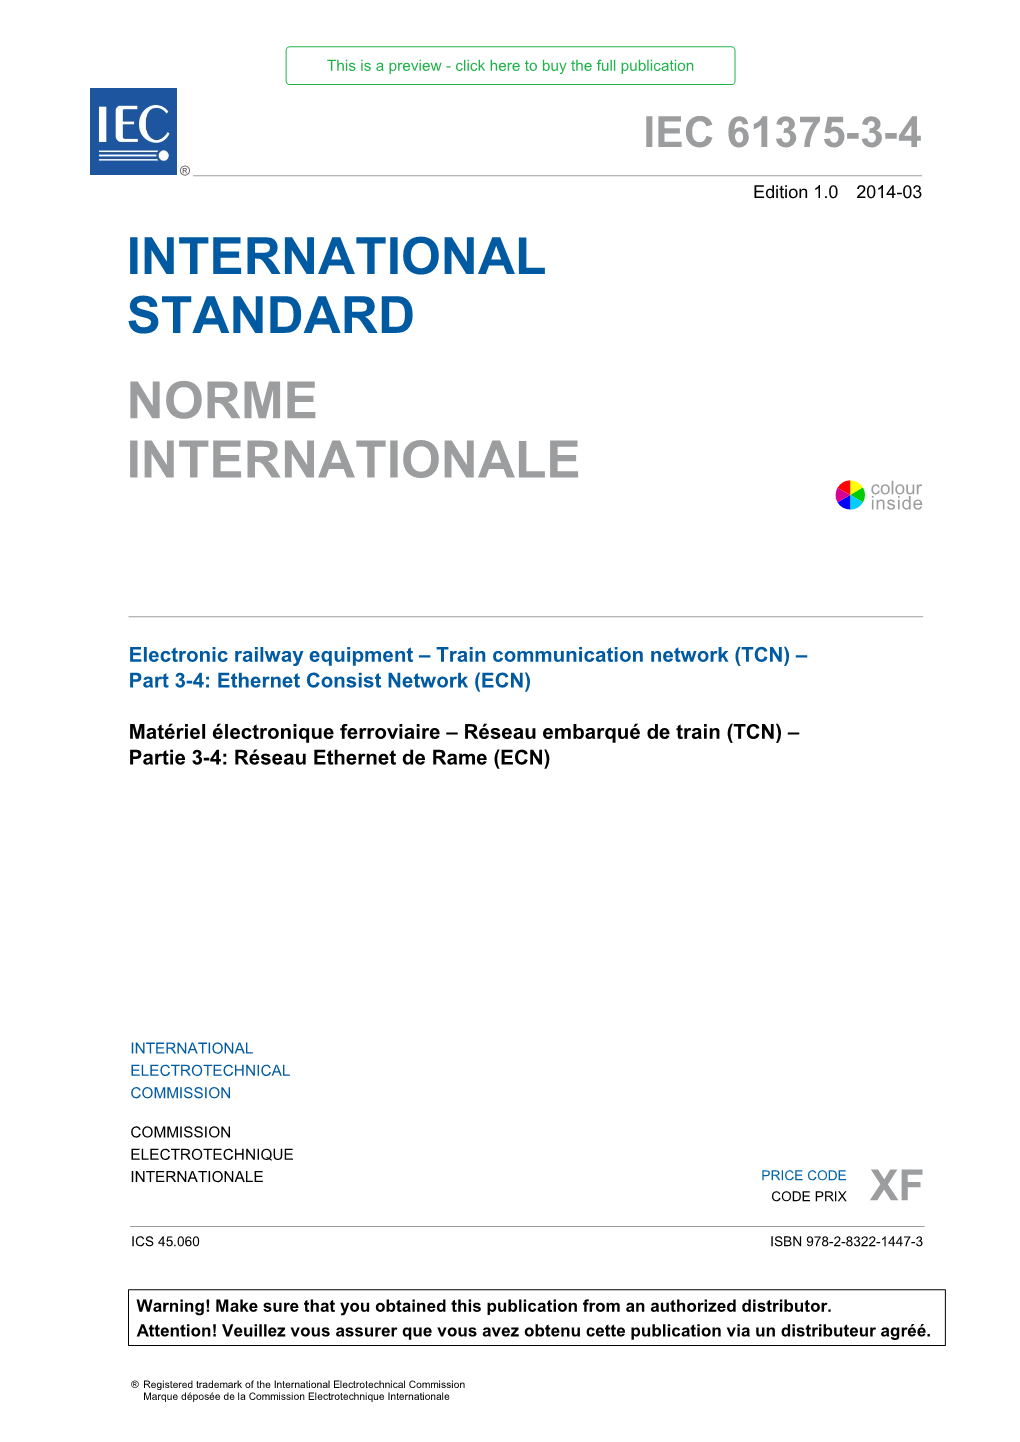 IEC 61375-3-4 ® Edition 1.0 2014-03